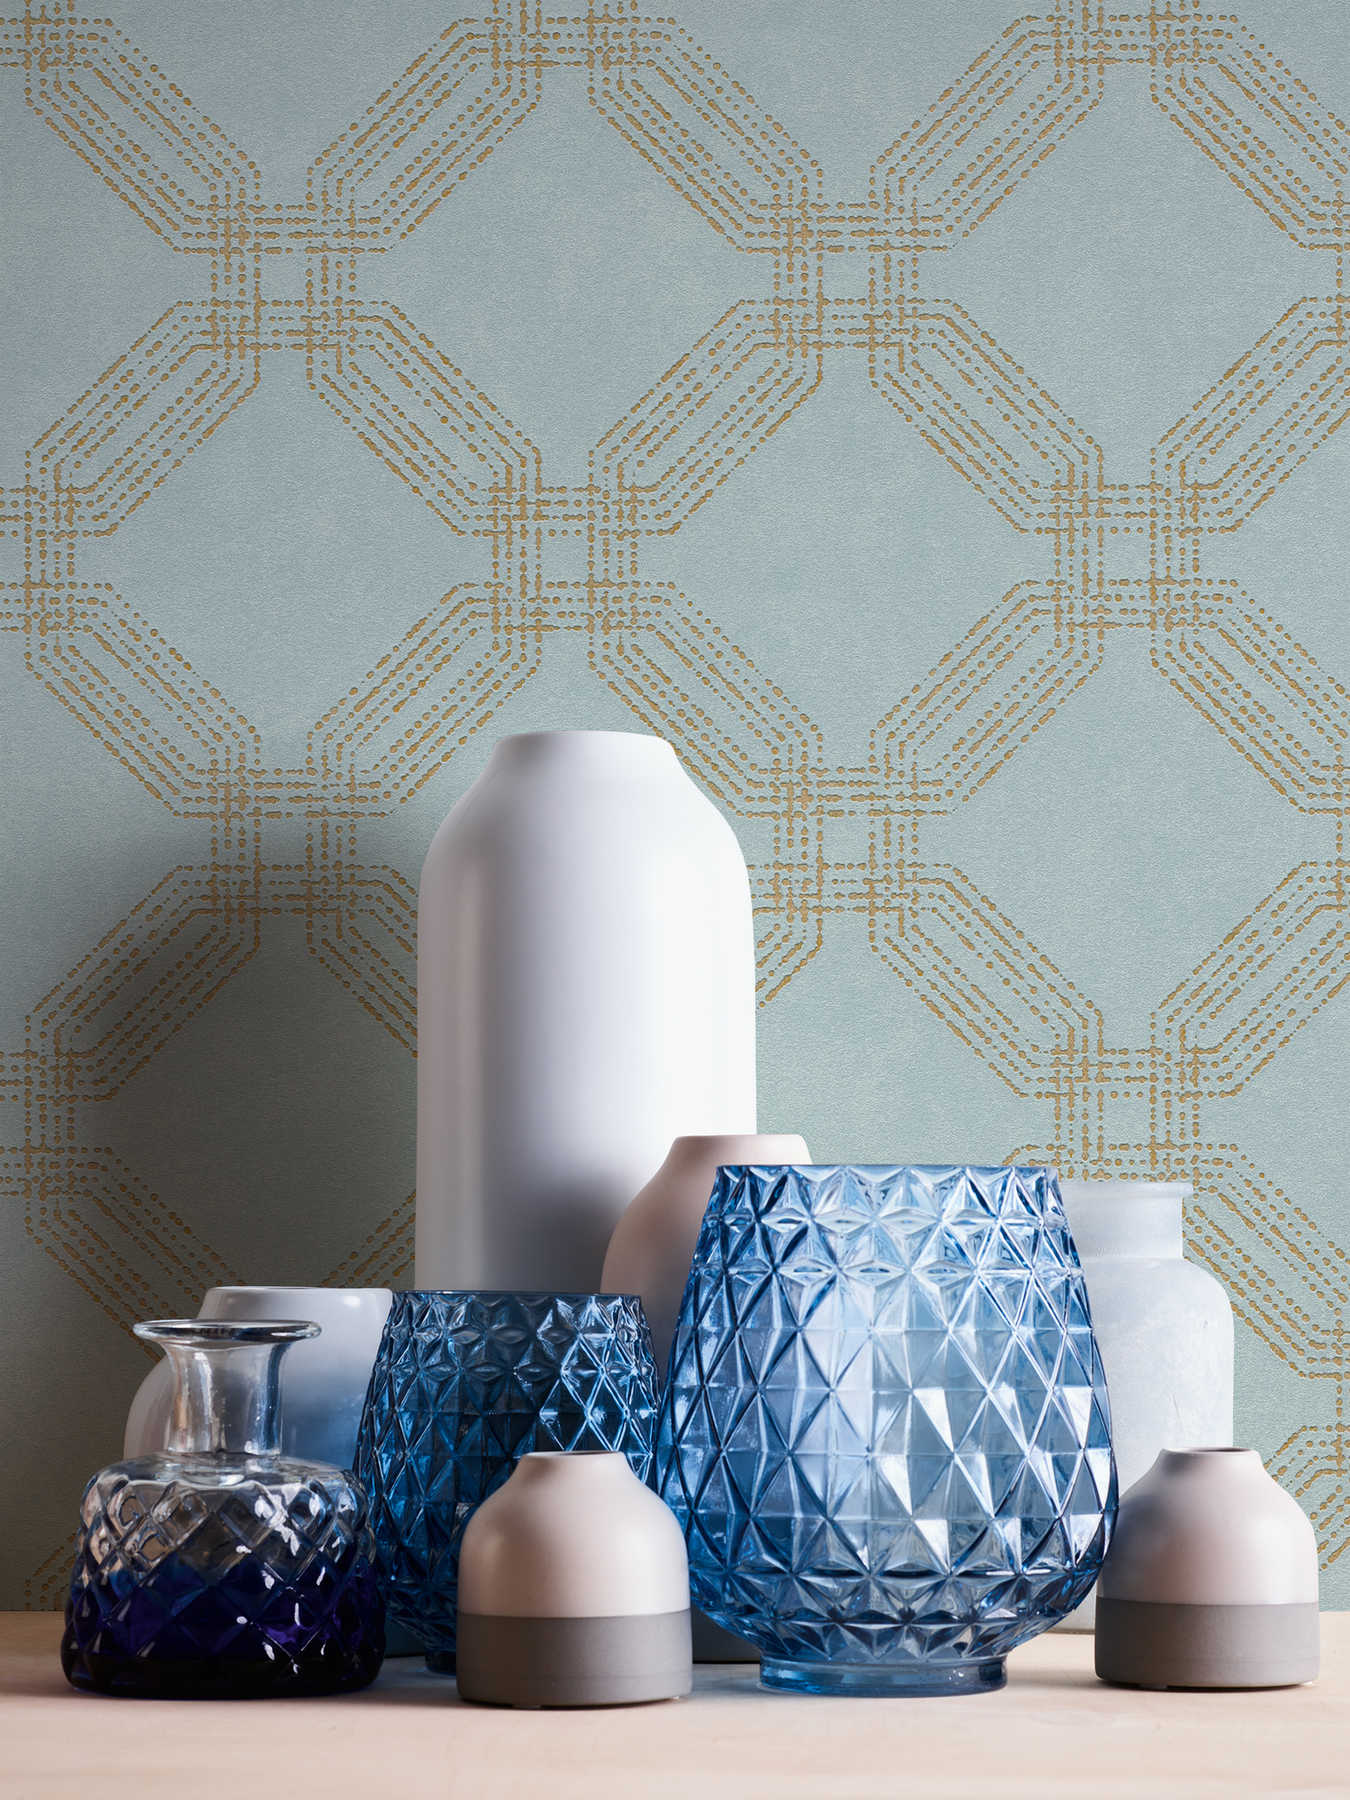             Geometric texture wallpaper with diamond look - blue, gold, green
        